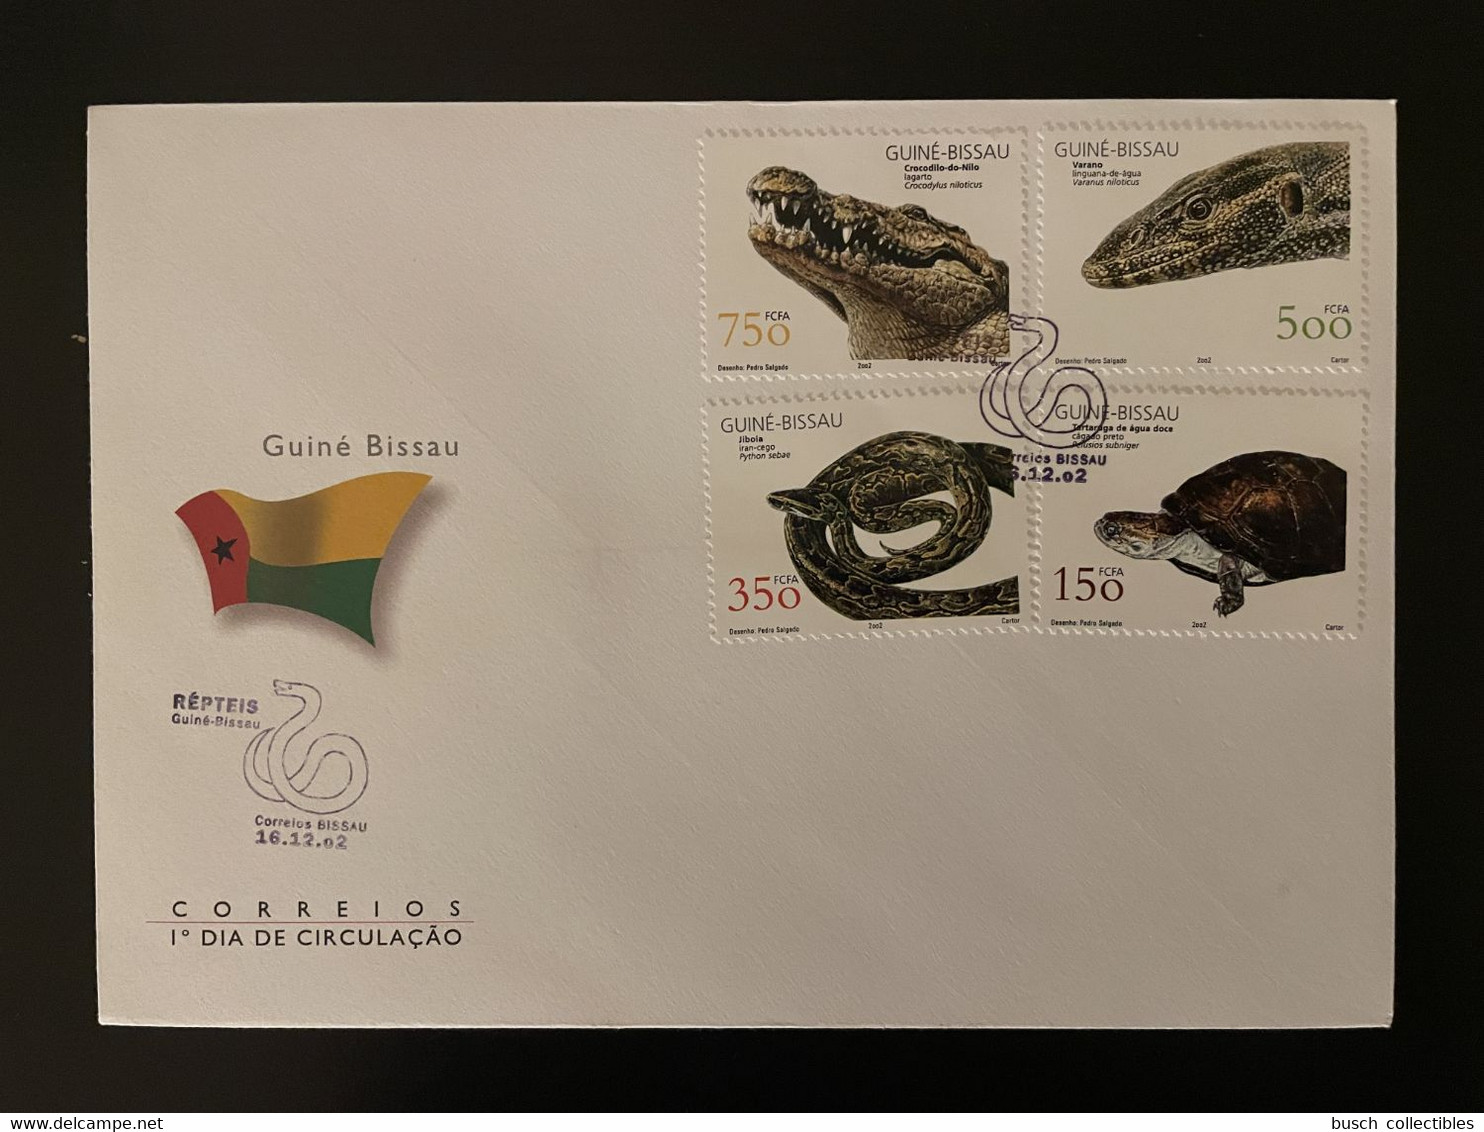 Guiné-Bissau Guinea Guinée Bissau 2002 Mi. 2029 - 2032 FDC Reptiles Reptilien Schildkröte Schlange Snake Serpent Tortue - Serpientes